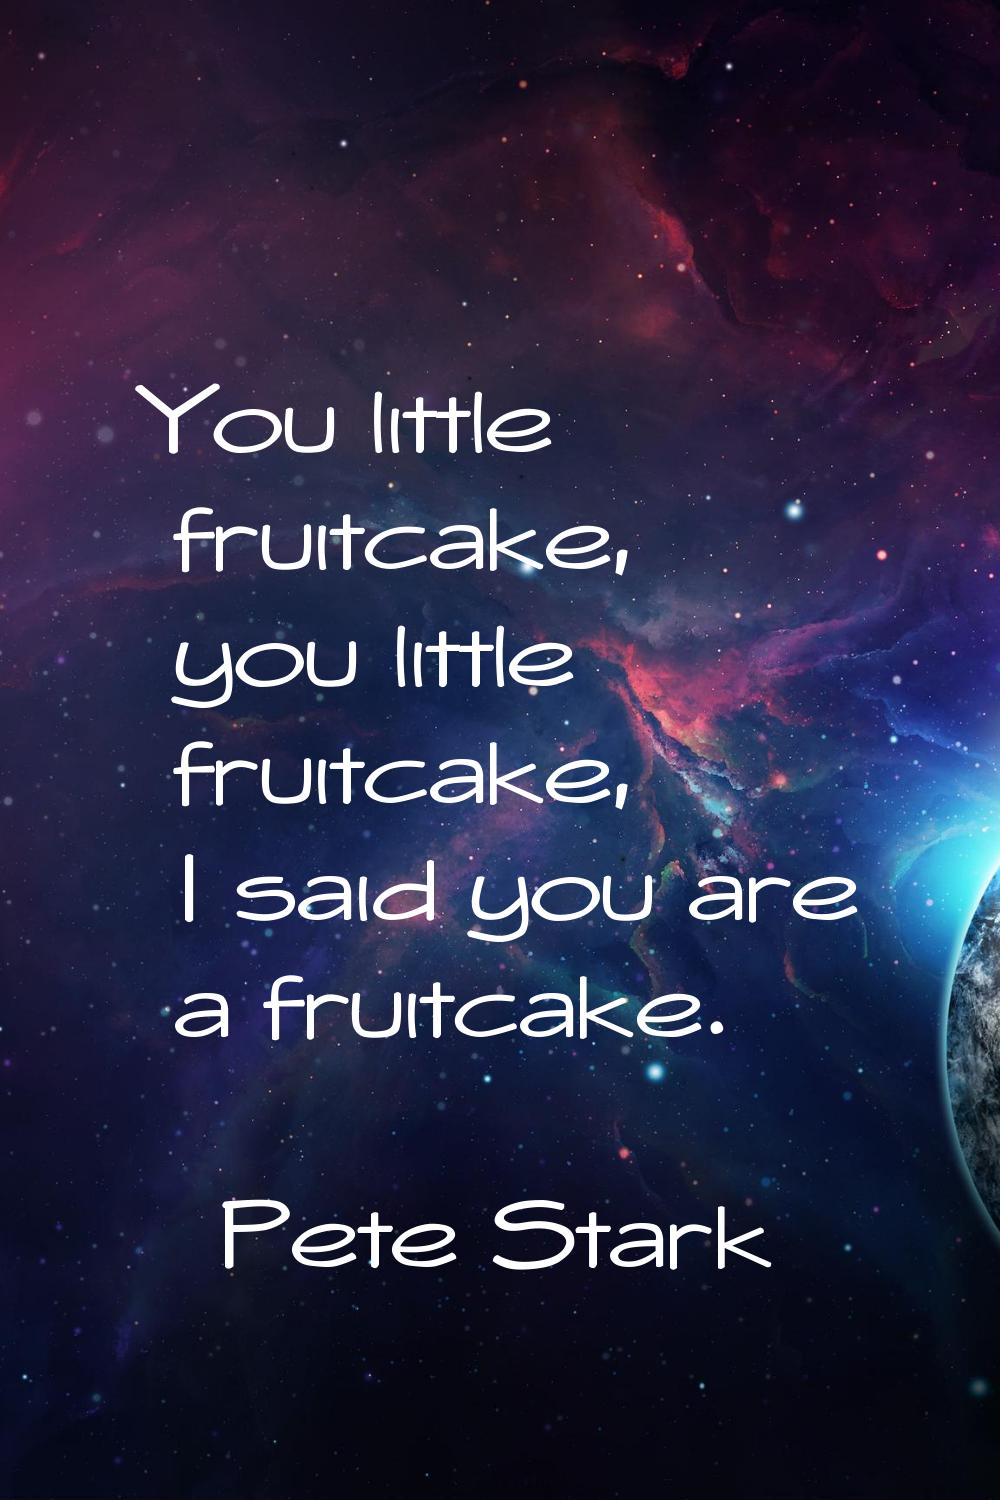 You little fruitcake, you little fruitcake, I said you are a fruitcake.